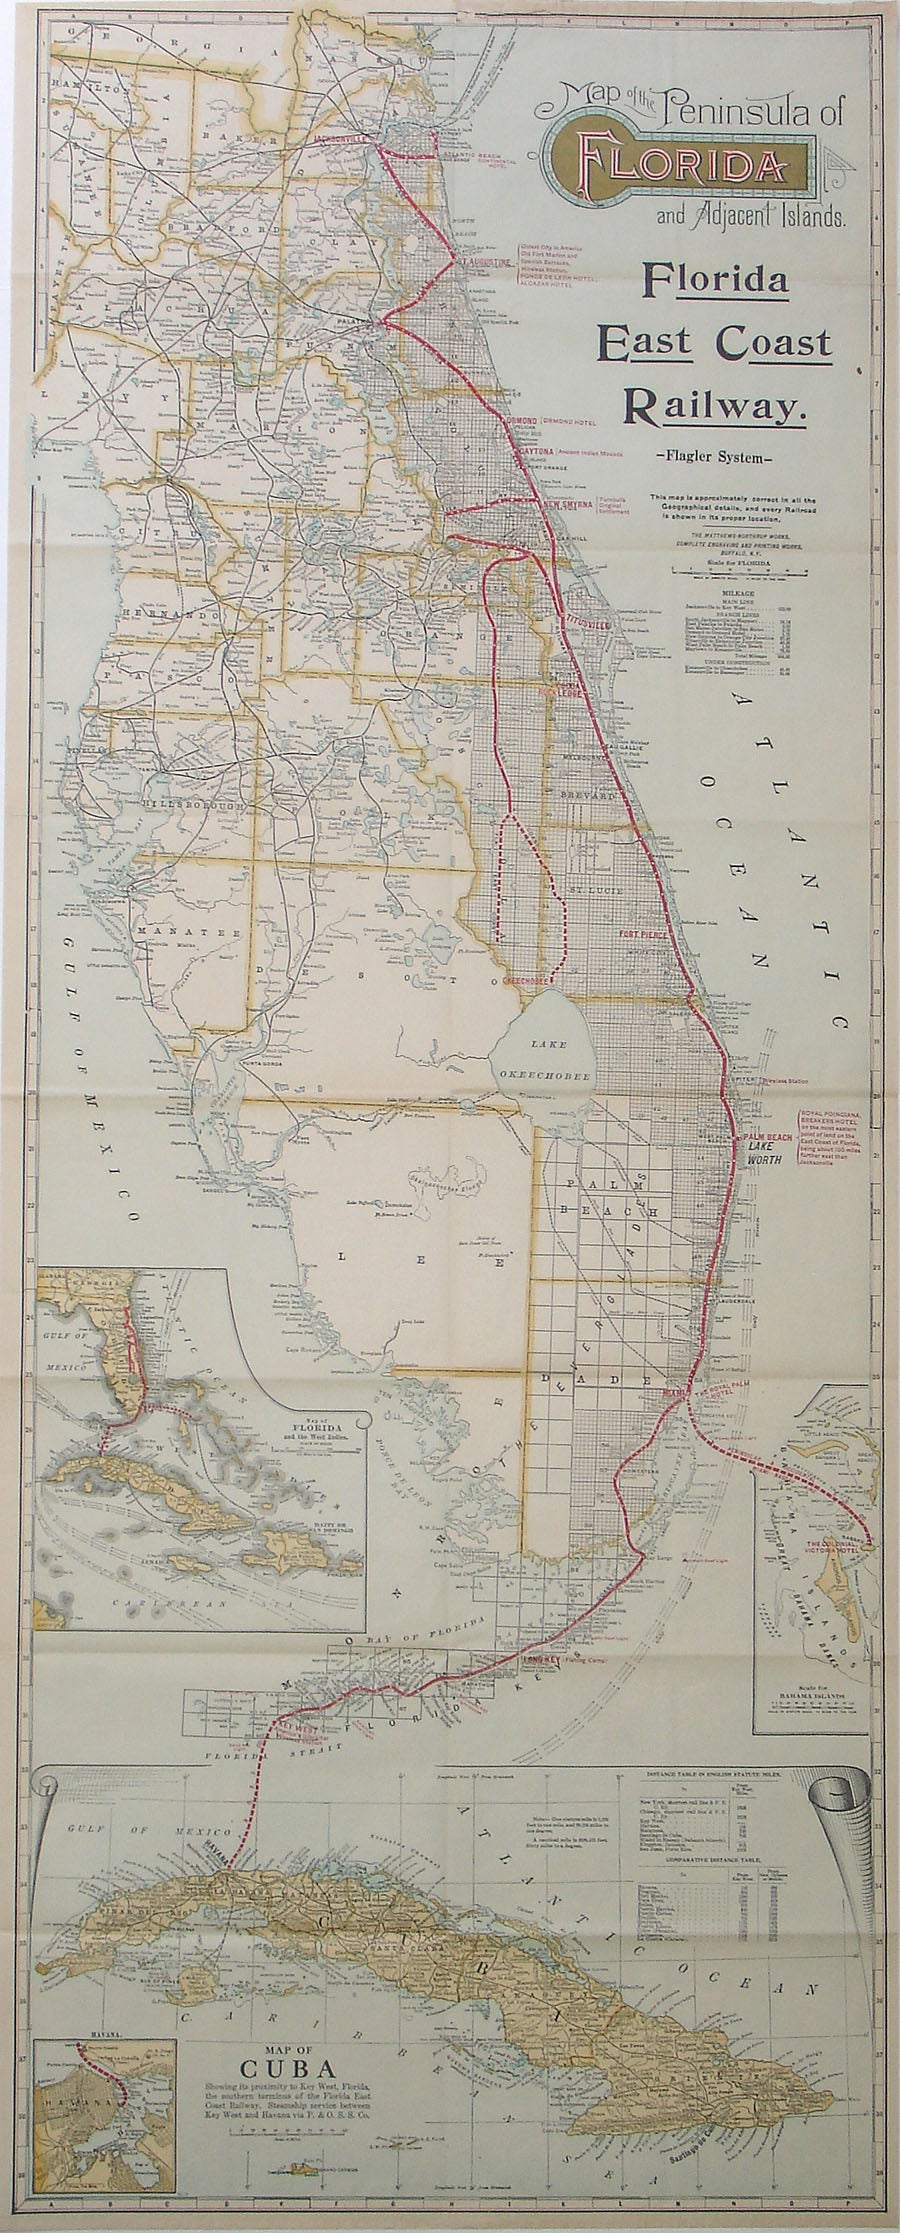 (FL.) Map of the Peninsula of Florida